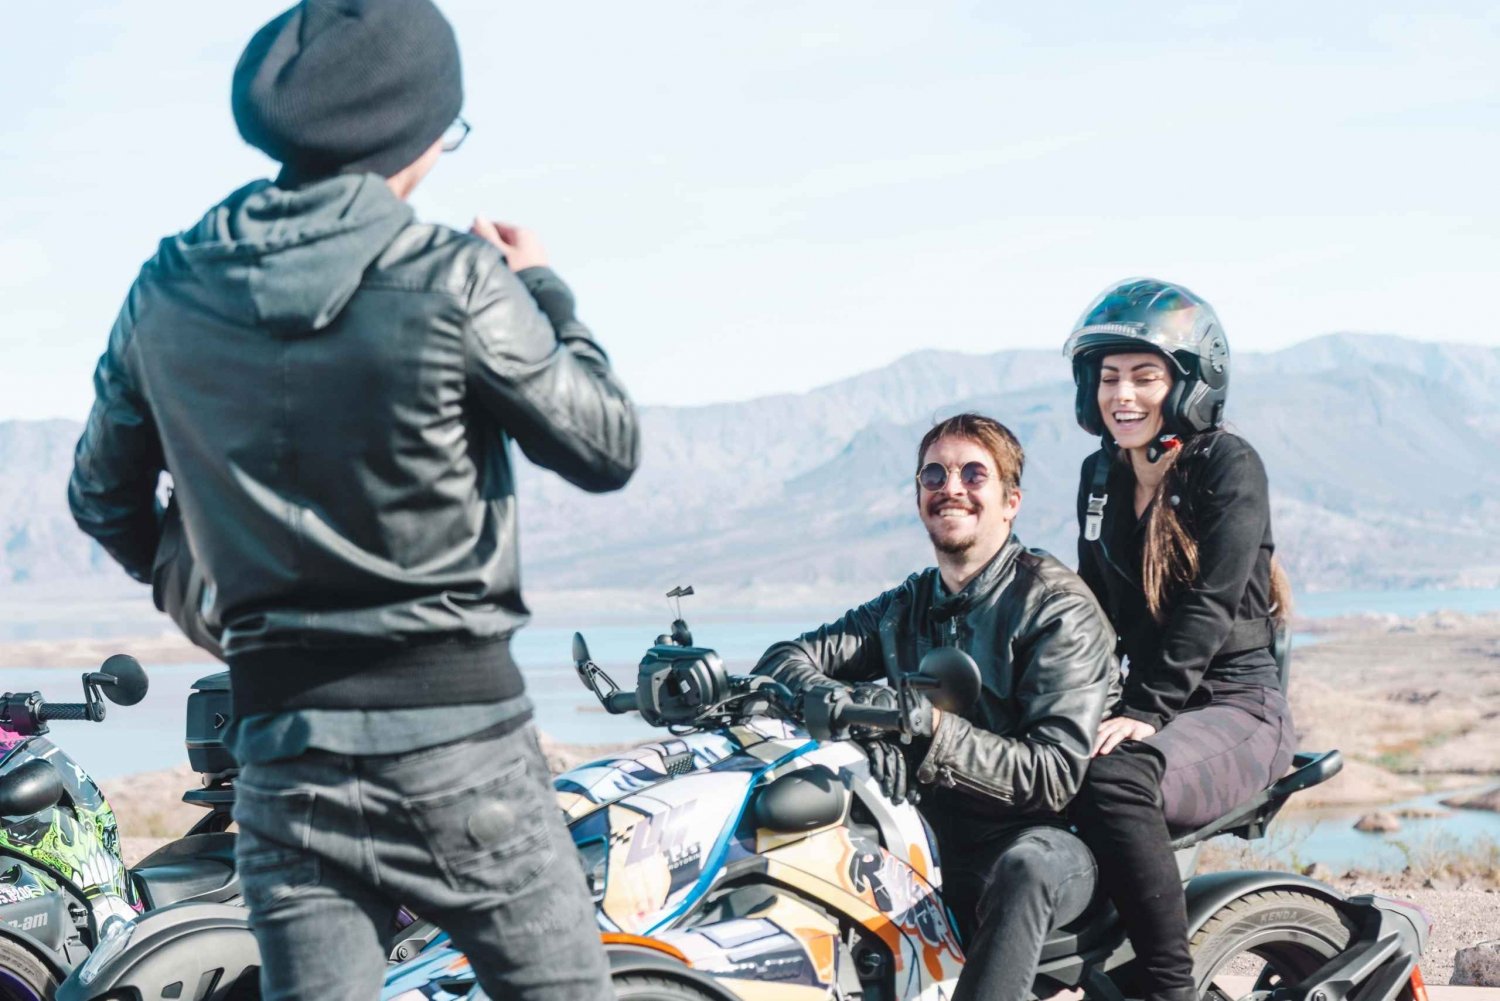 Red Rock Canyon: Privat guidad trike-tur för par!